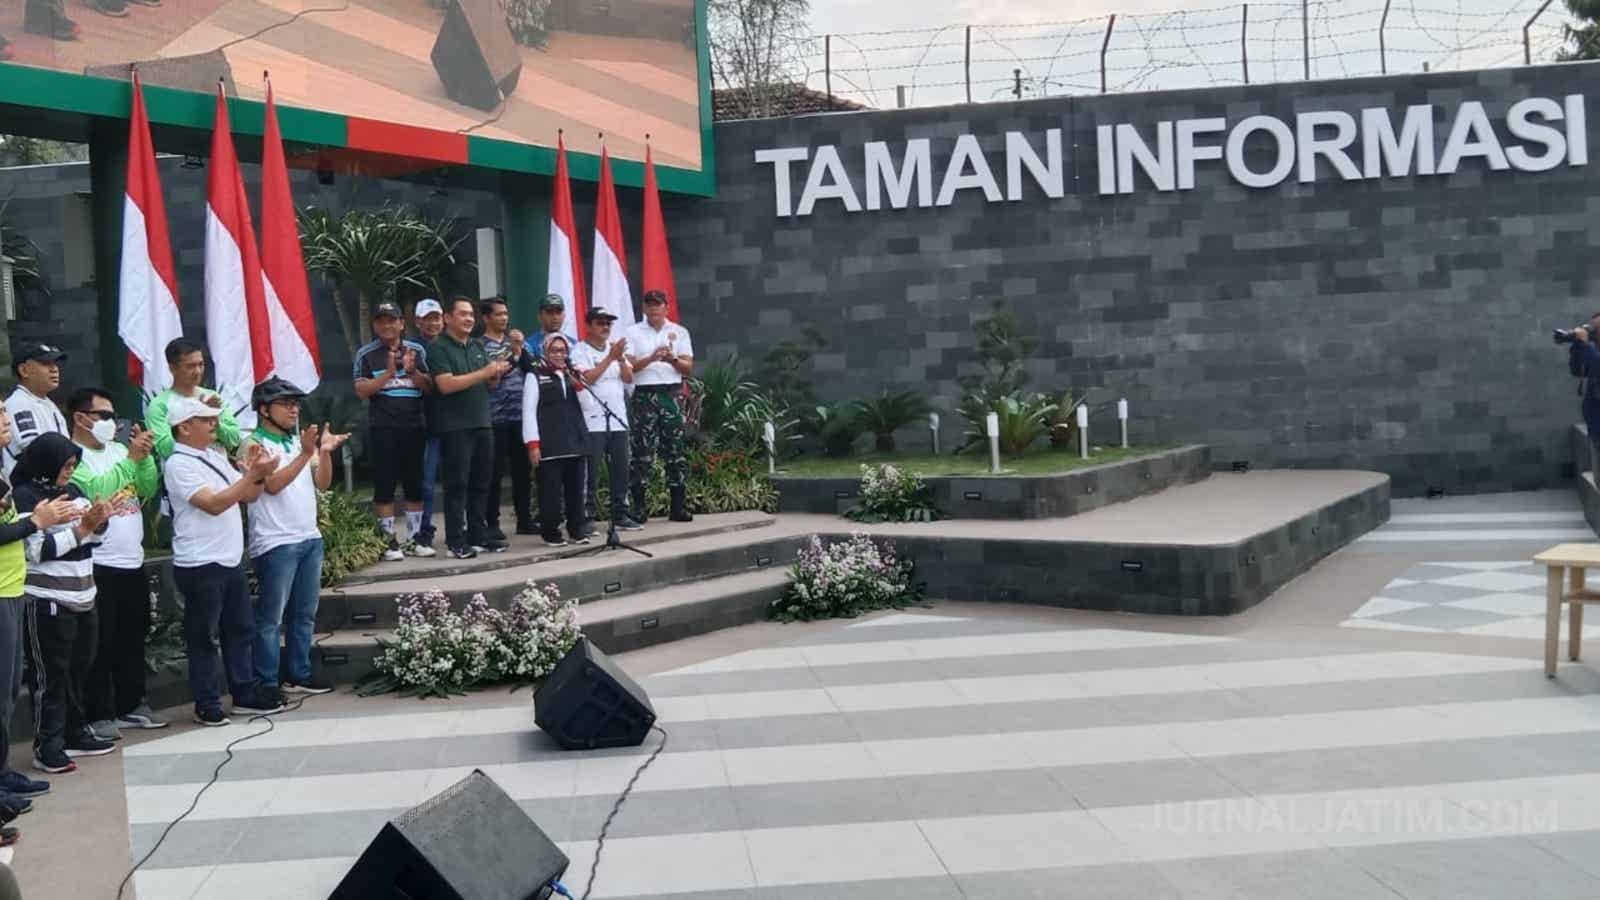 Taman Informasi Jombang, Ada Videotron Raksasa dan Panggung Bikin Acara